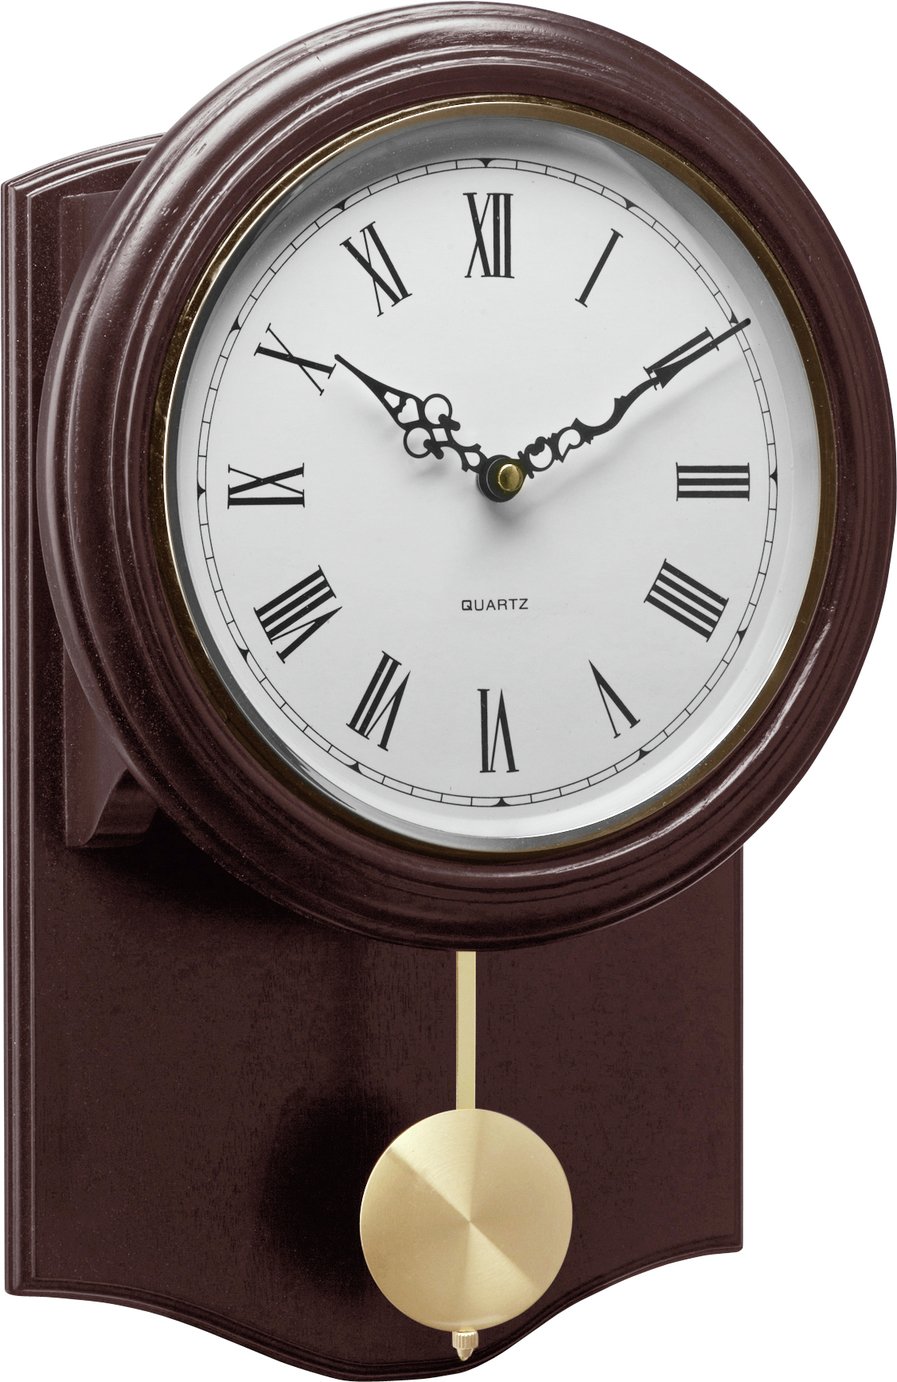 Argos Home Pendulum Wall Clock Review